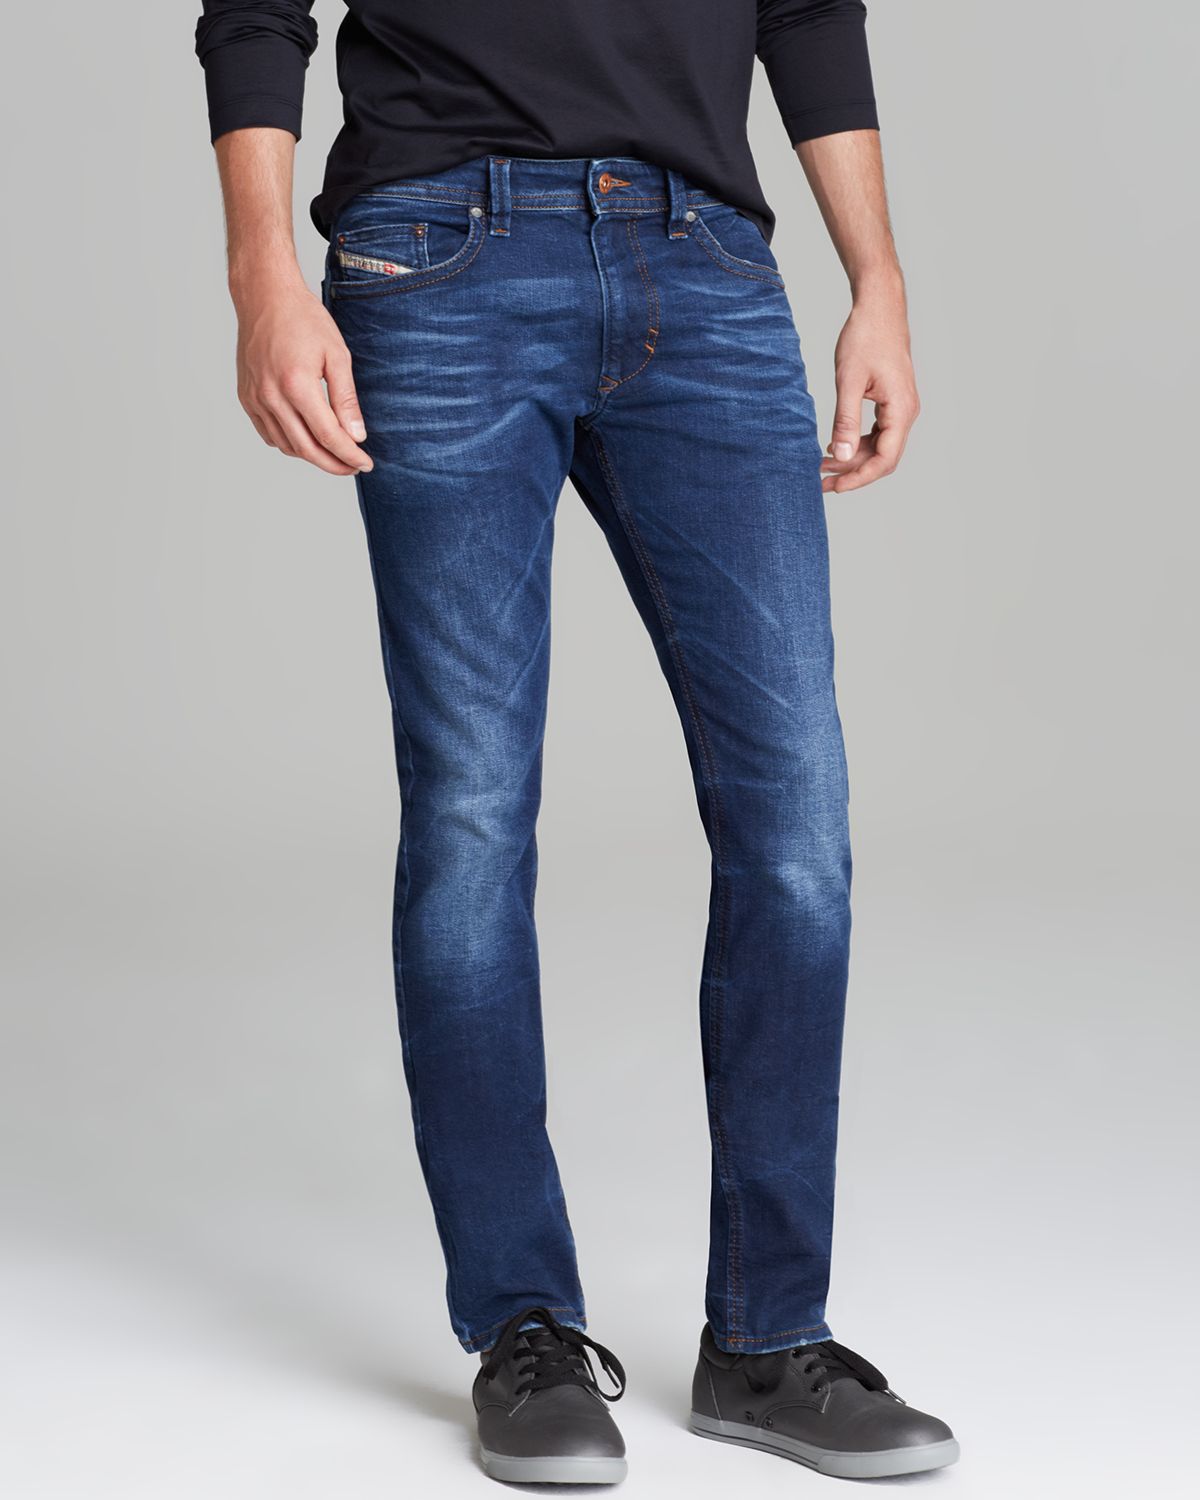 Lyst - Diesel Jeans Thavar Slim Fit in 820s in Blue for Men